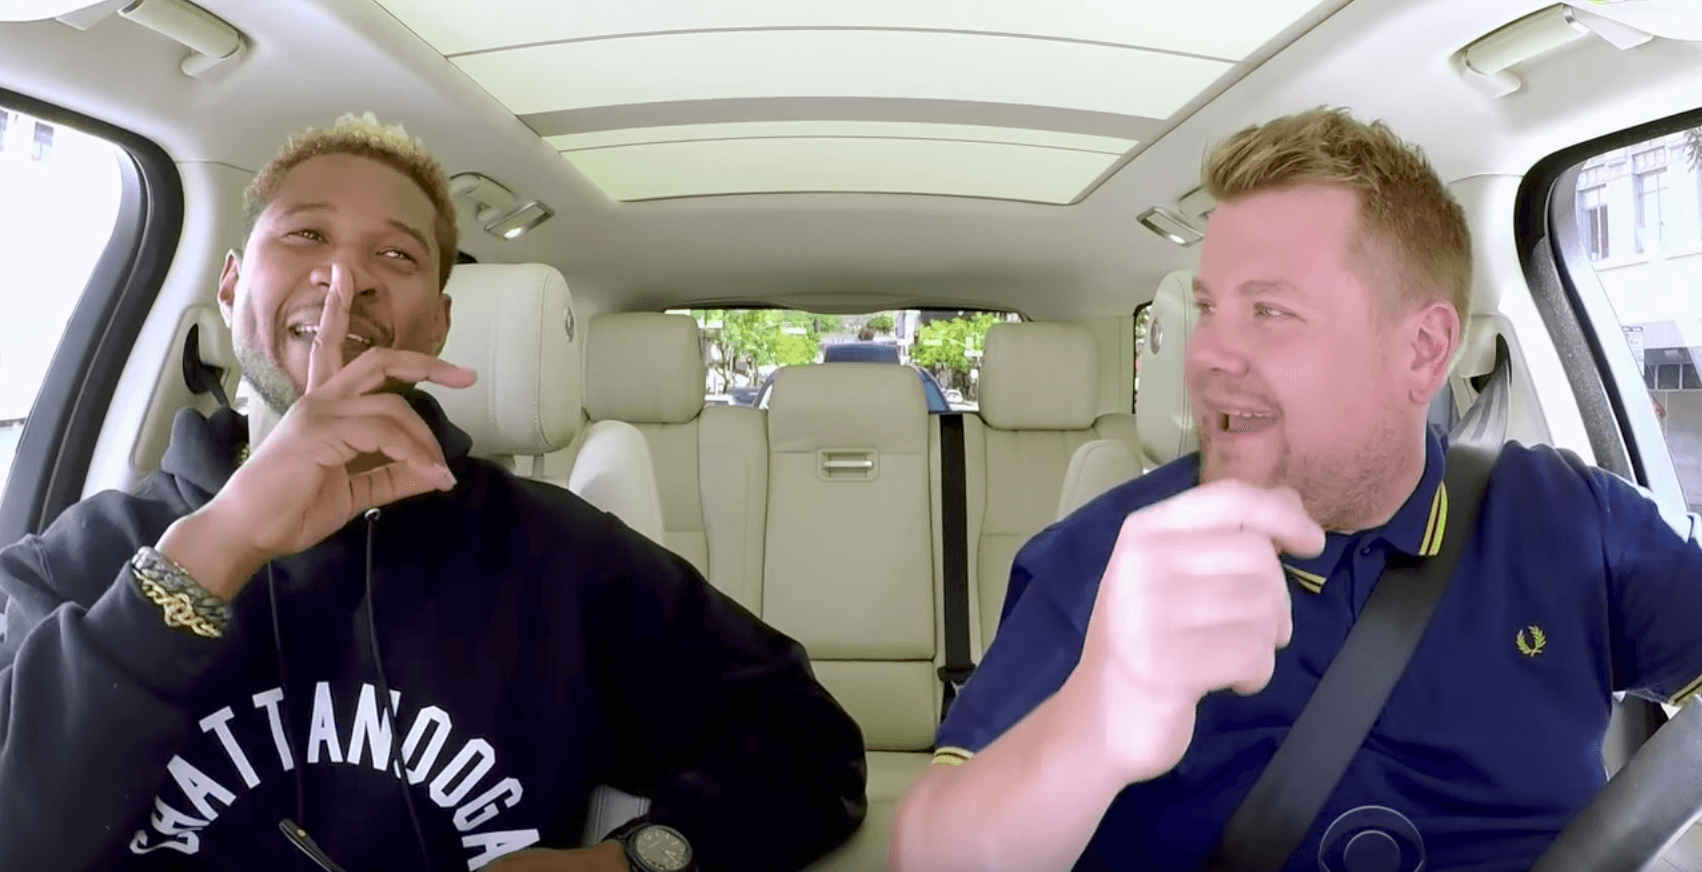 WATCH: Usher teaches James Corden how to dance on ‘Carpool Karaoke’